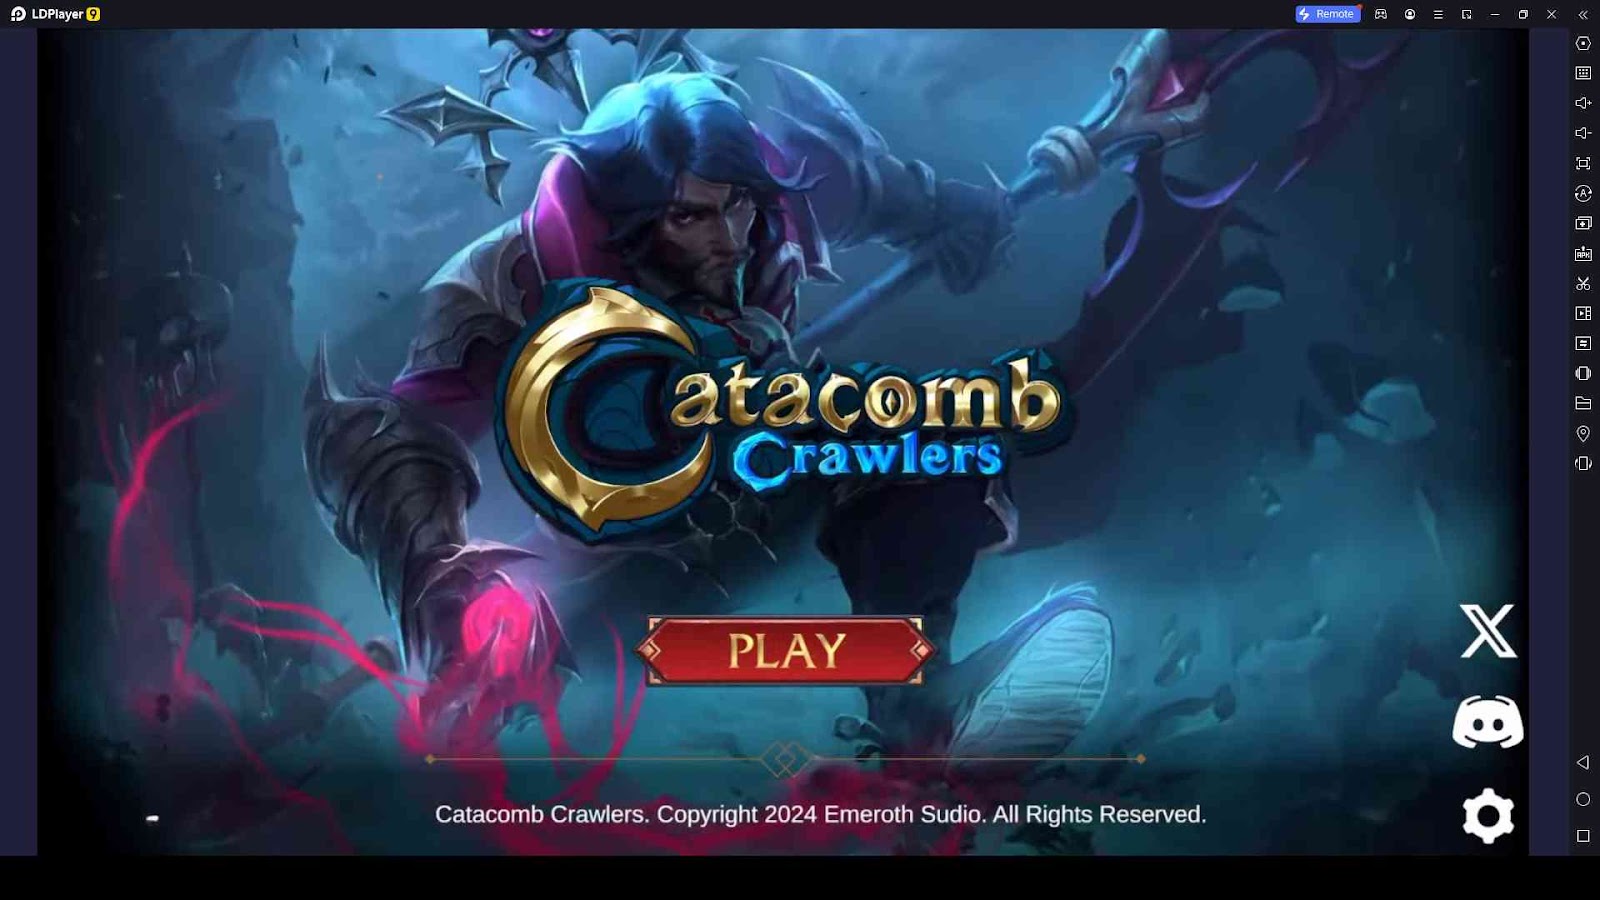 Catacomb Crawlers Codes